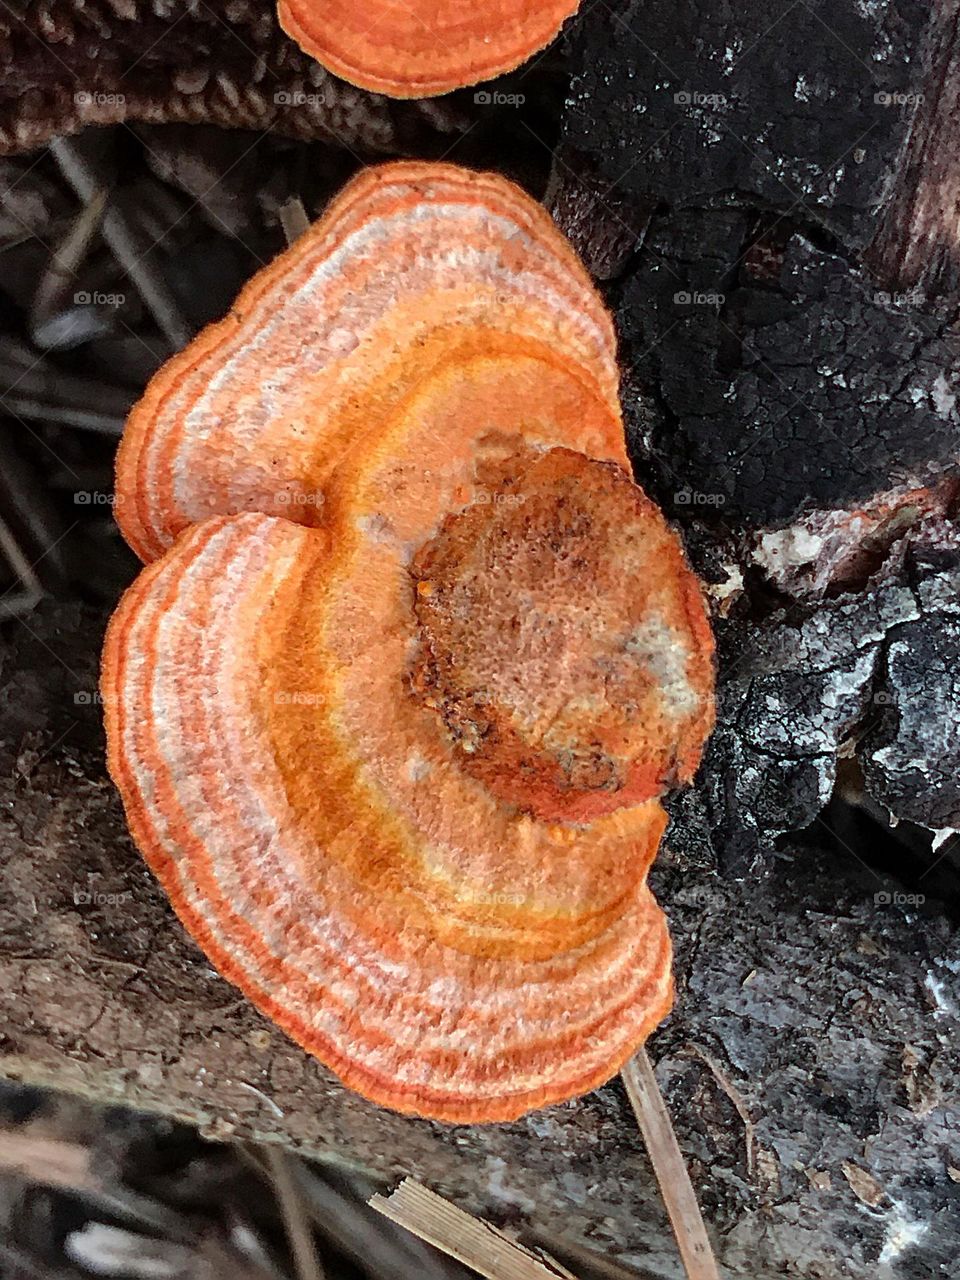 Amazing orange fungus.